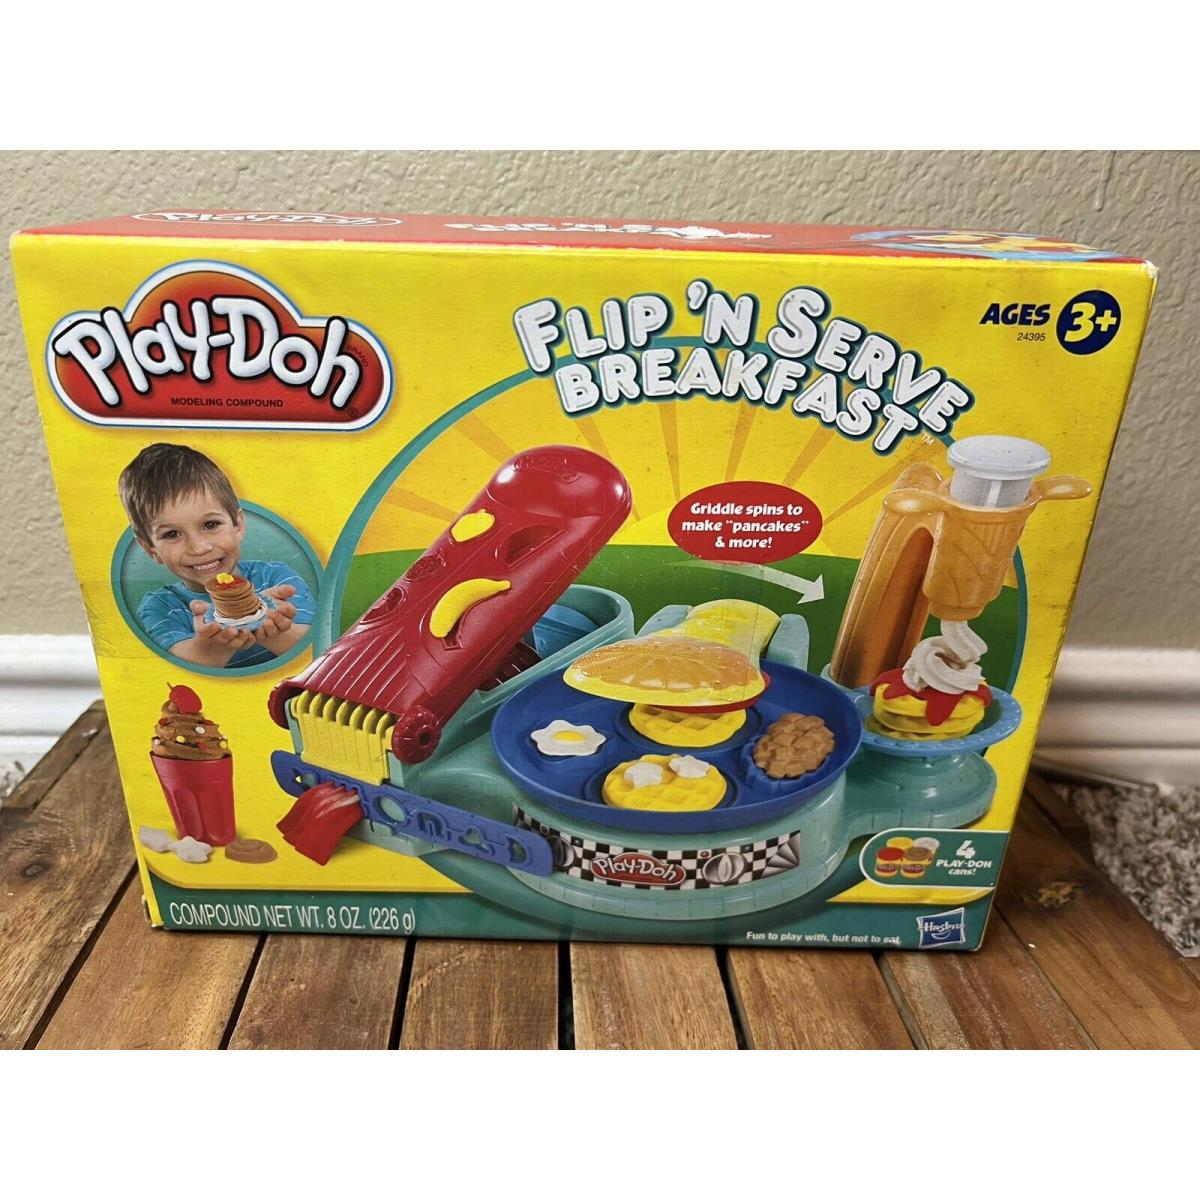 Play Doh Flip N Serve Breakfast 2010 Modeling Compound Kids Plahdoh Fun Toy Set